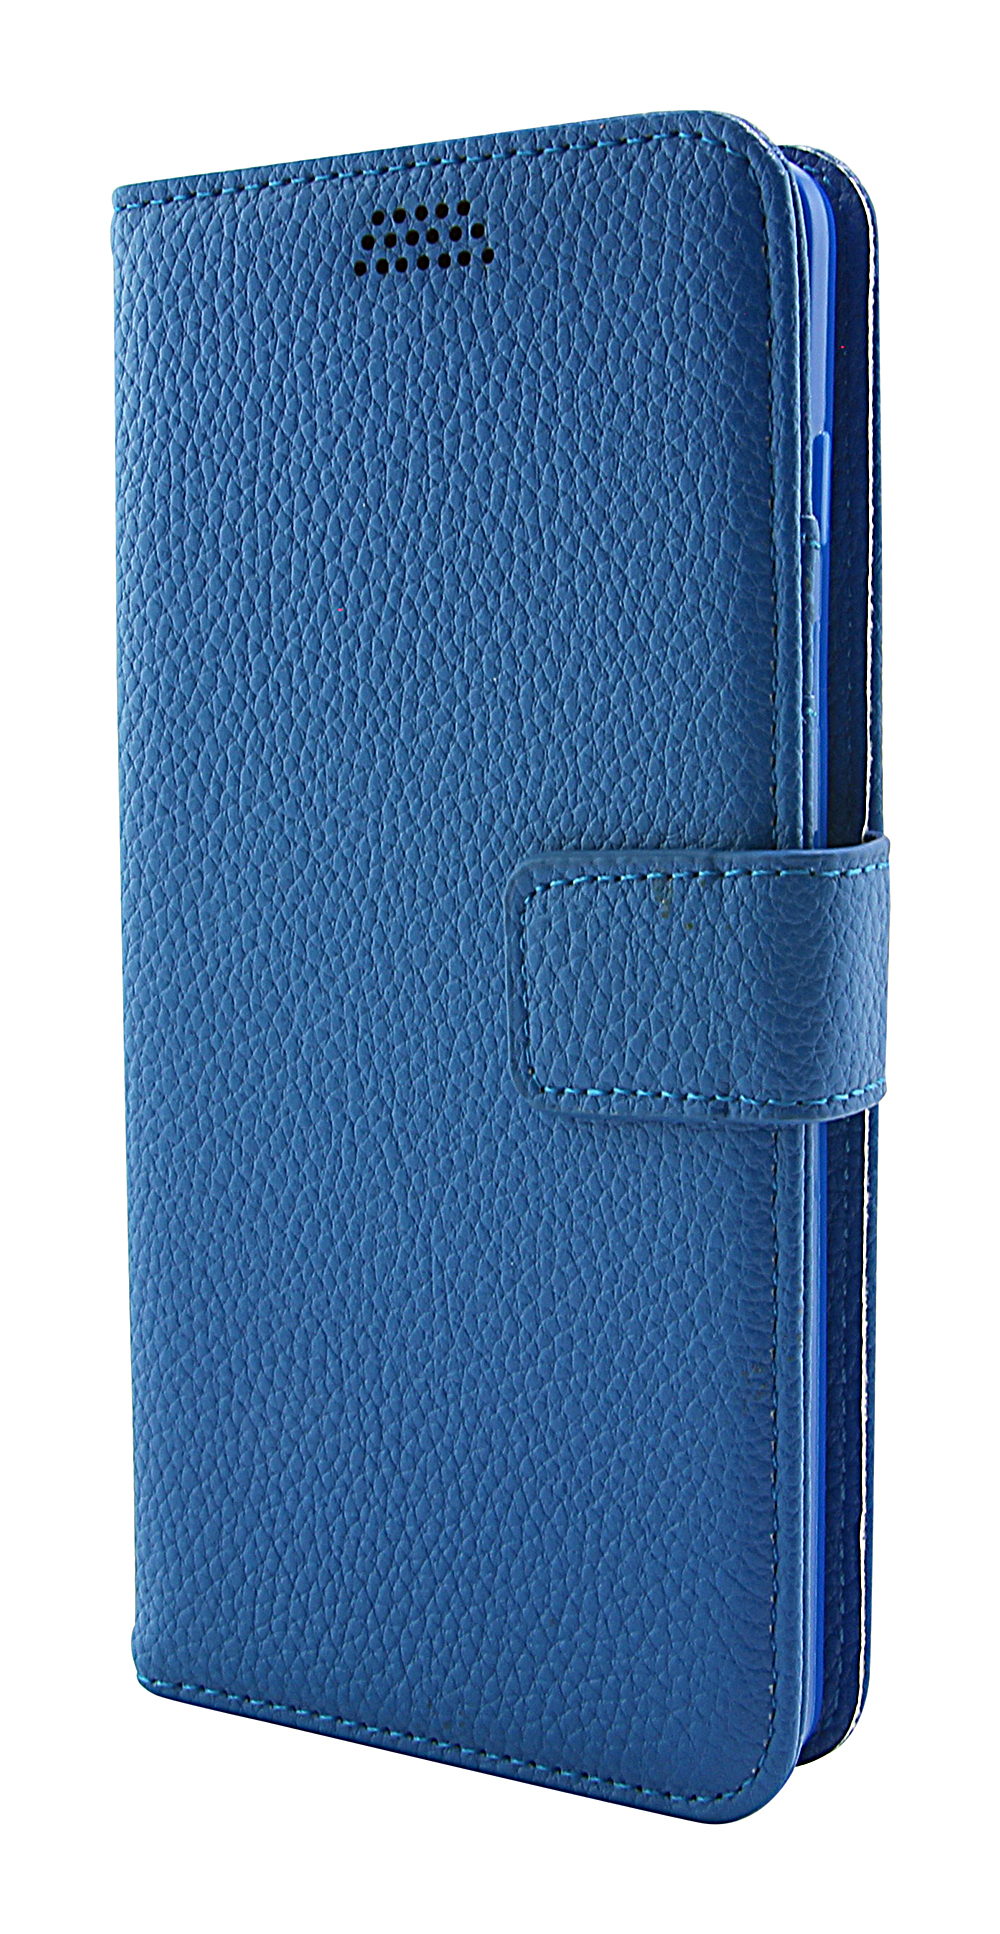 Standcase Wallet Samsung Galaxy J6 2018 (J600FN/DS)